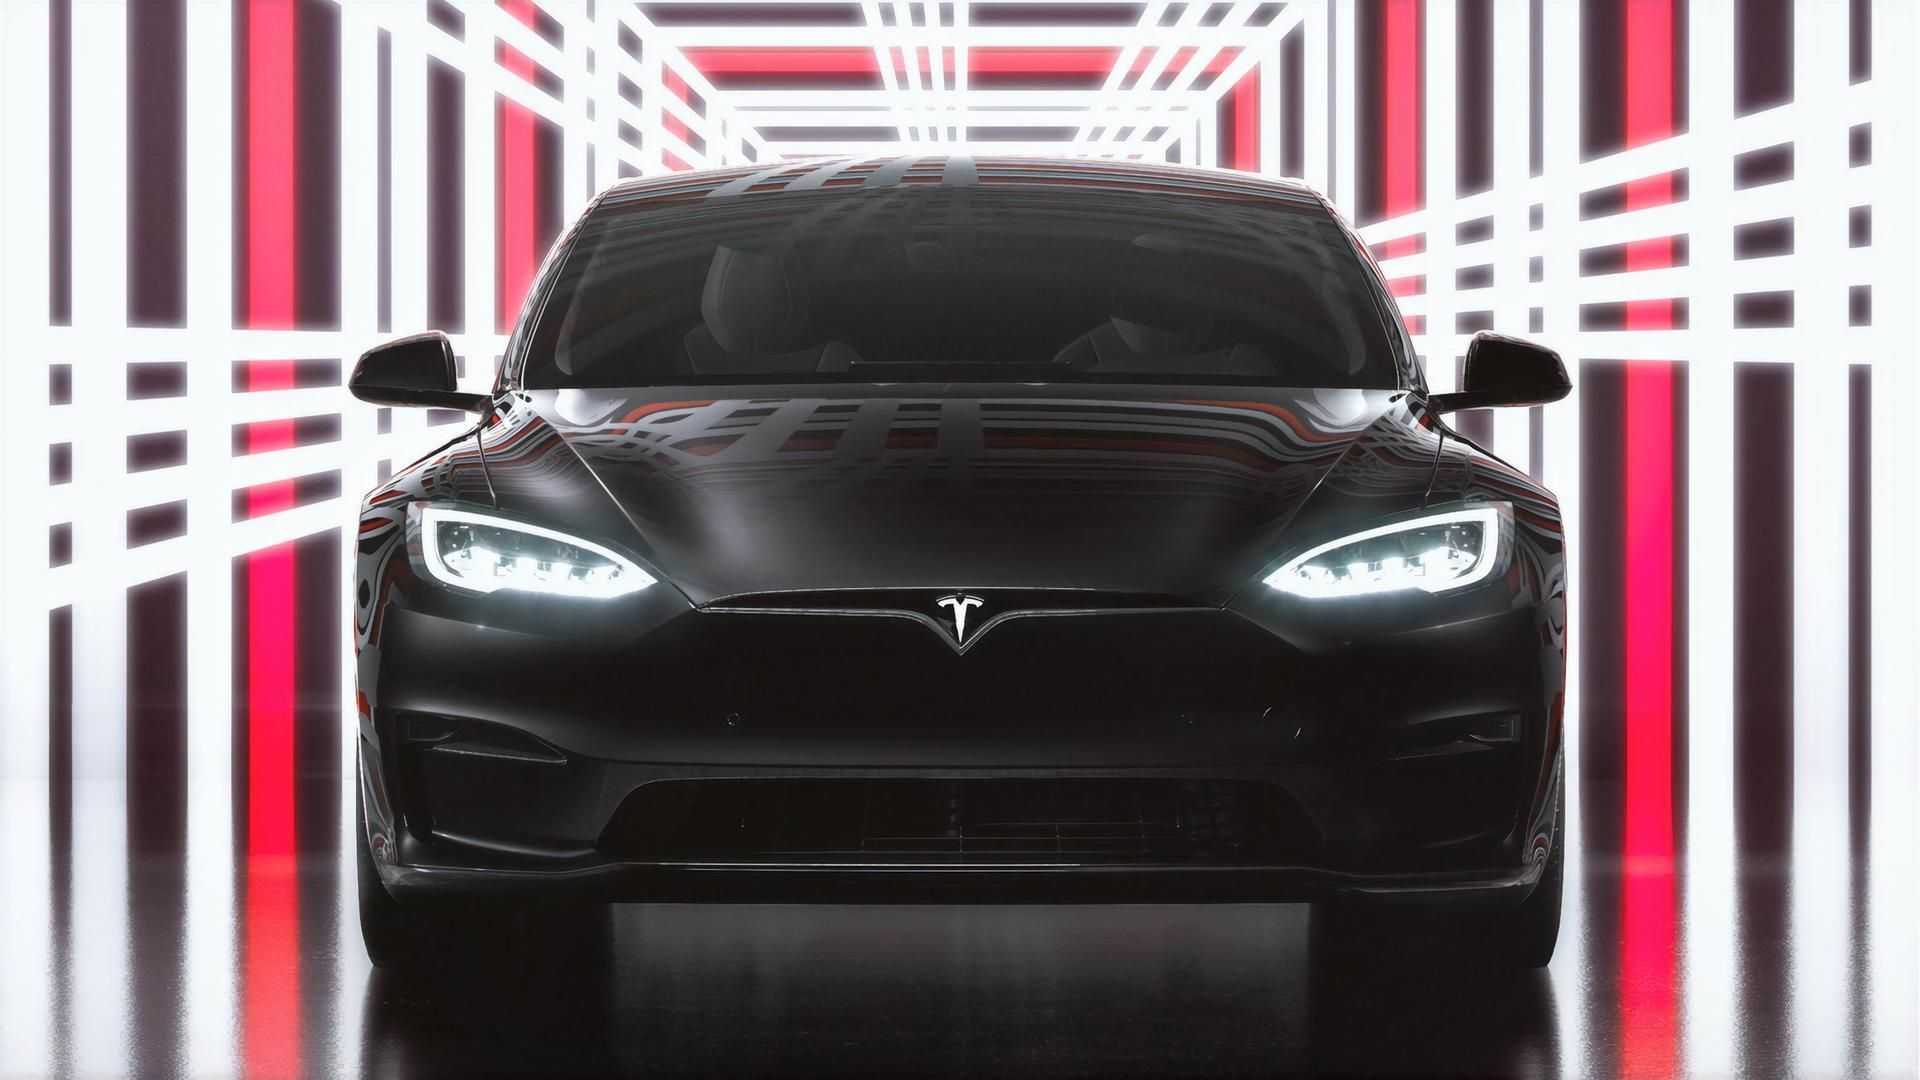 Tesla Model S Plaid Delivery Event Confirmed For June